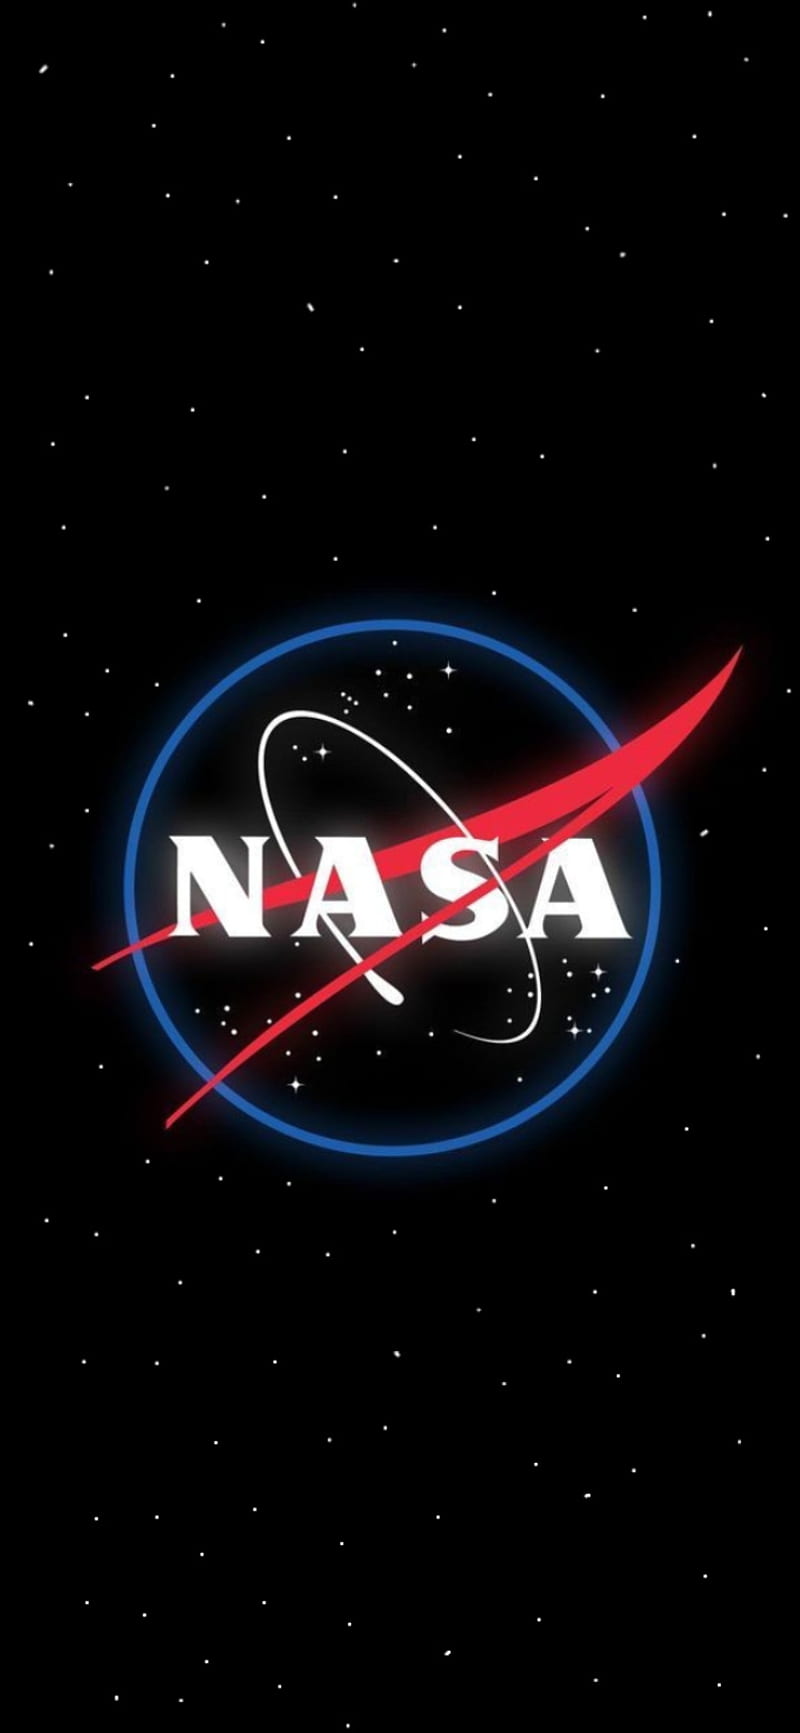 NASA Astronaut  IPhone Wallpapers  iPhone Wallpapers